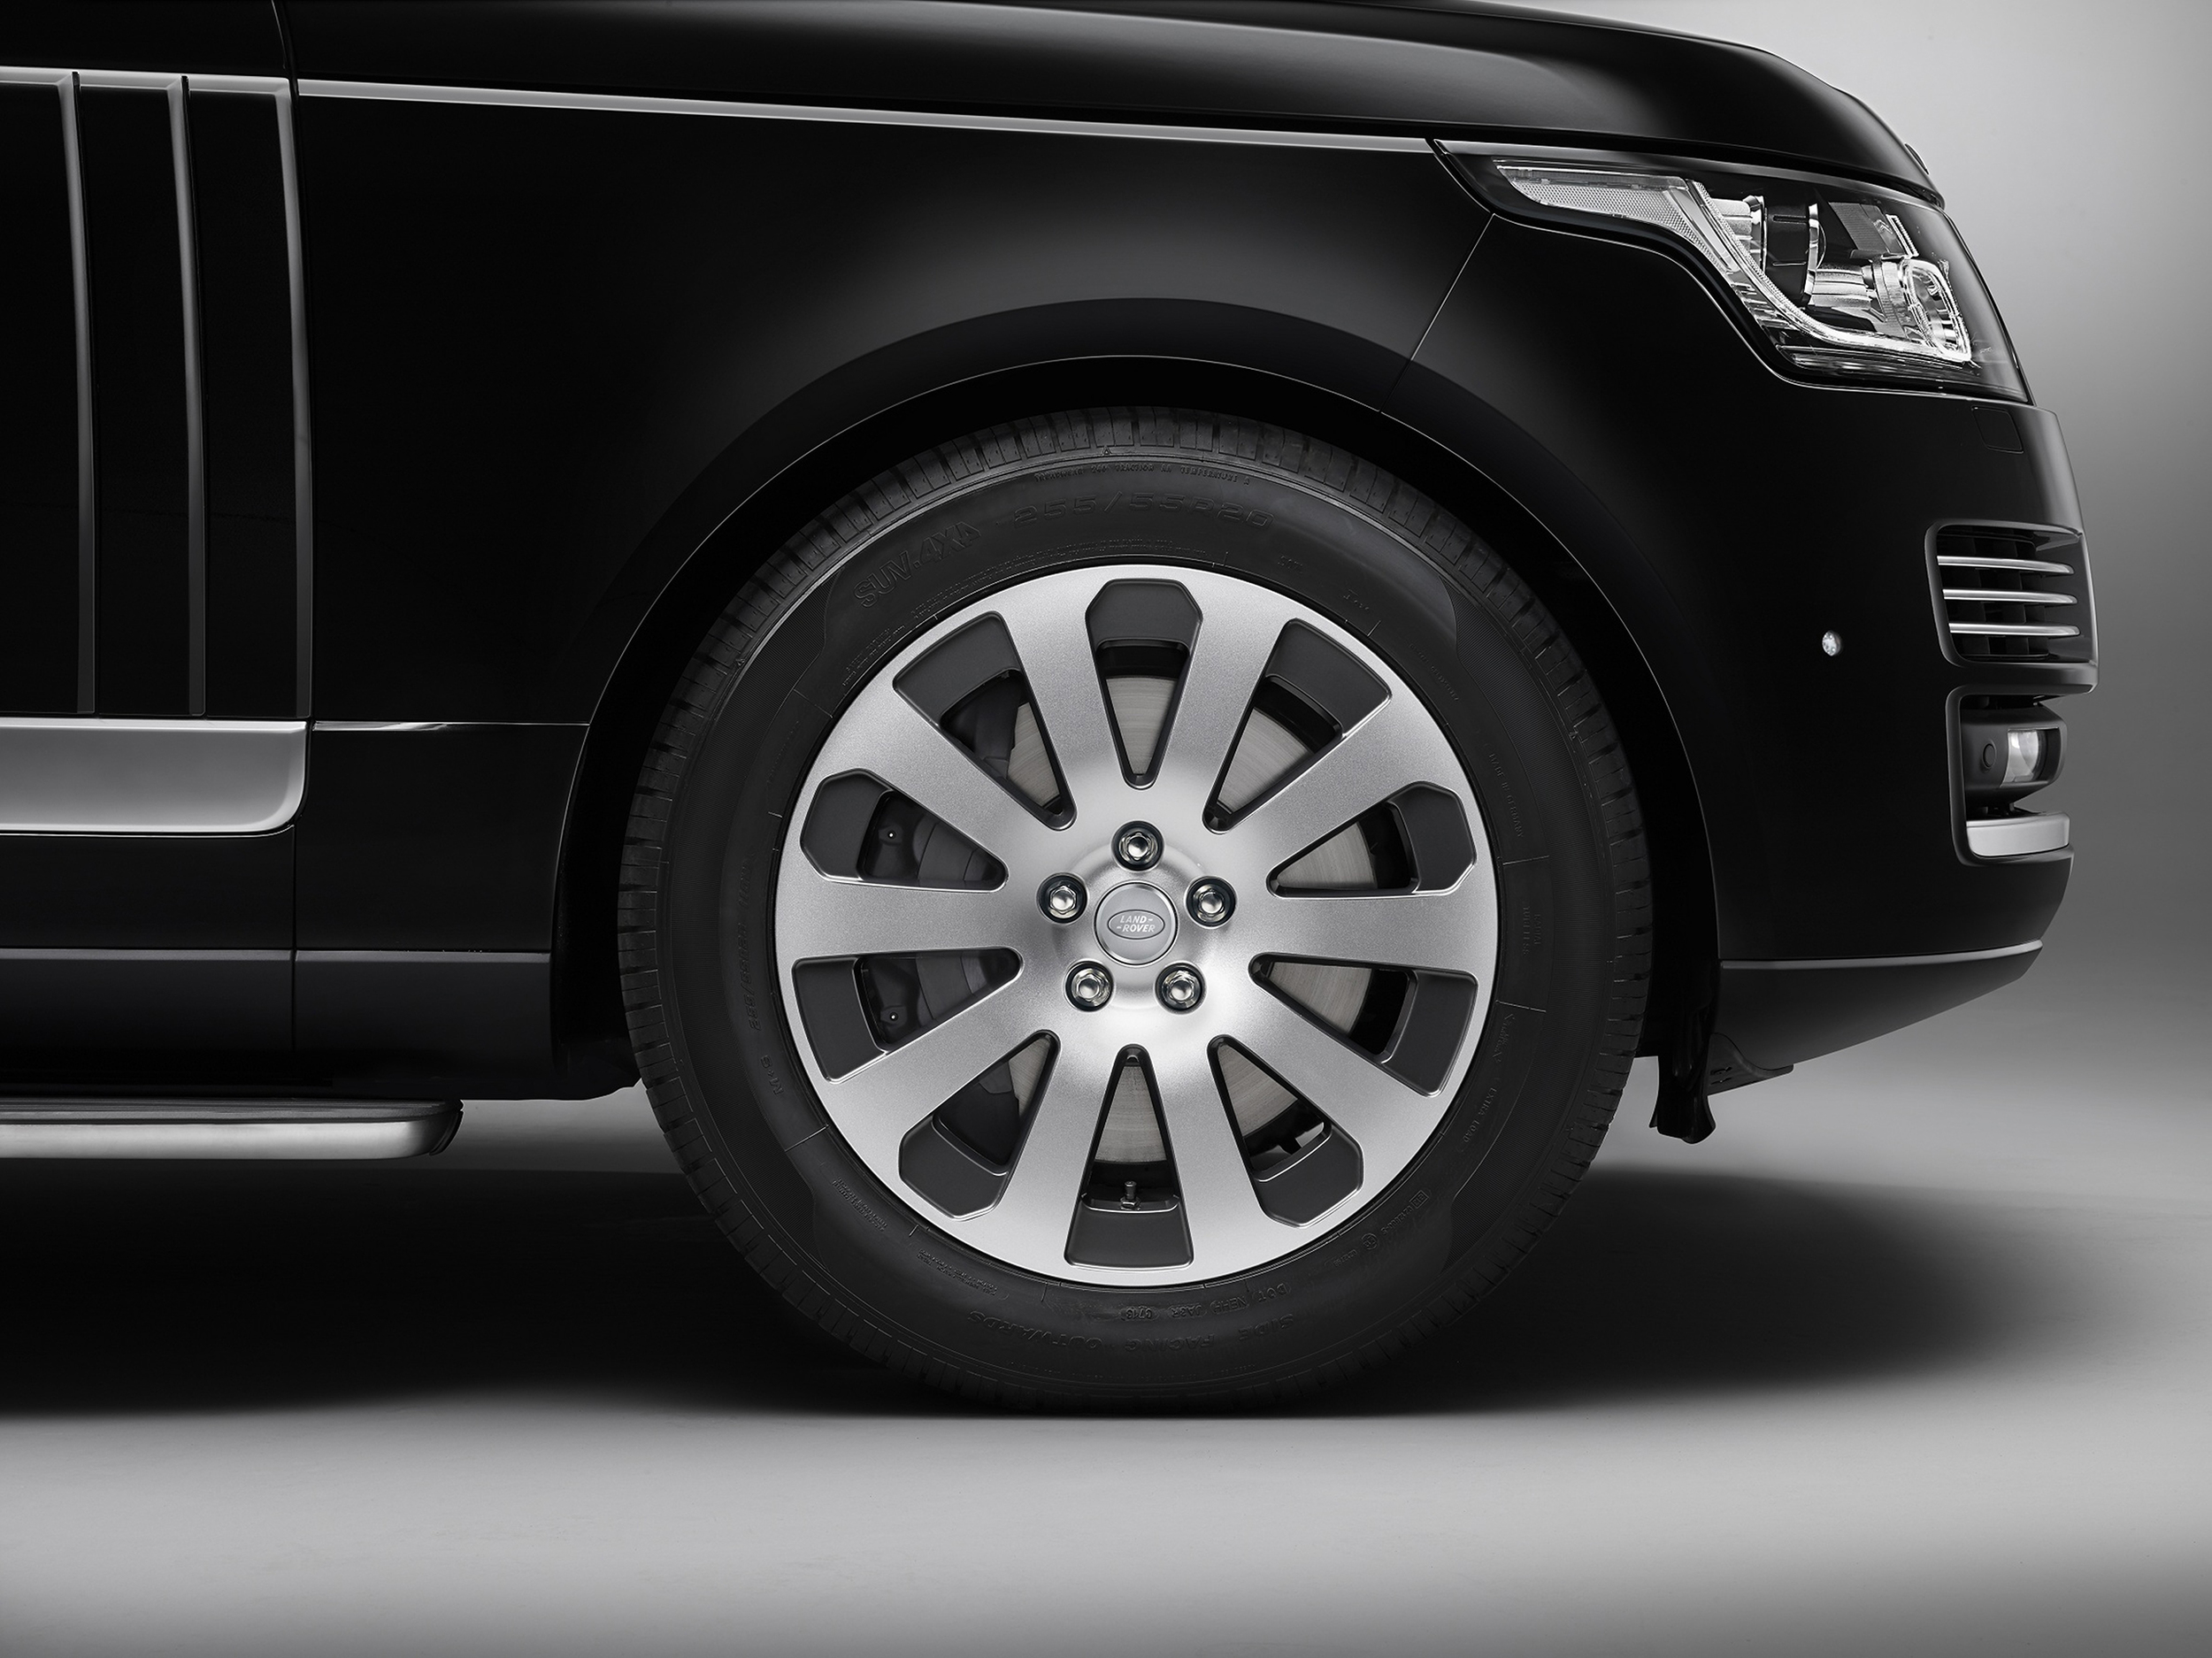 Land Rover reveals bulletproof Range Rover